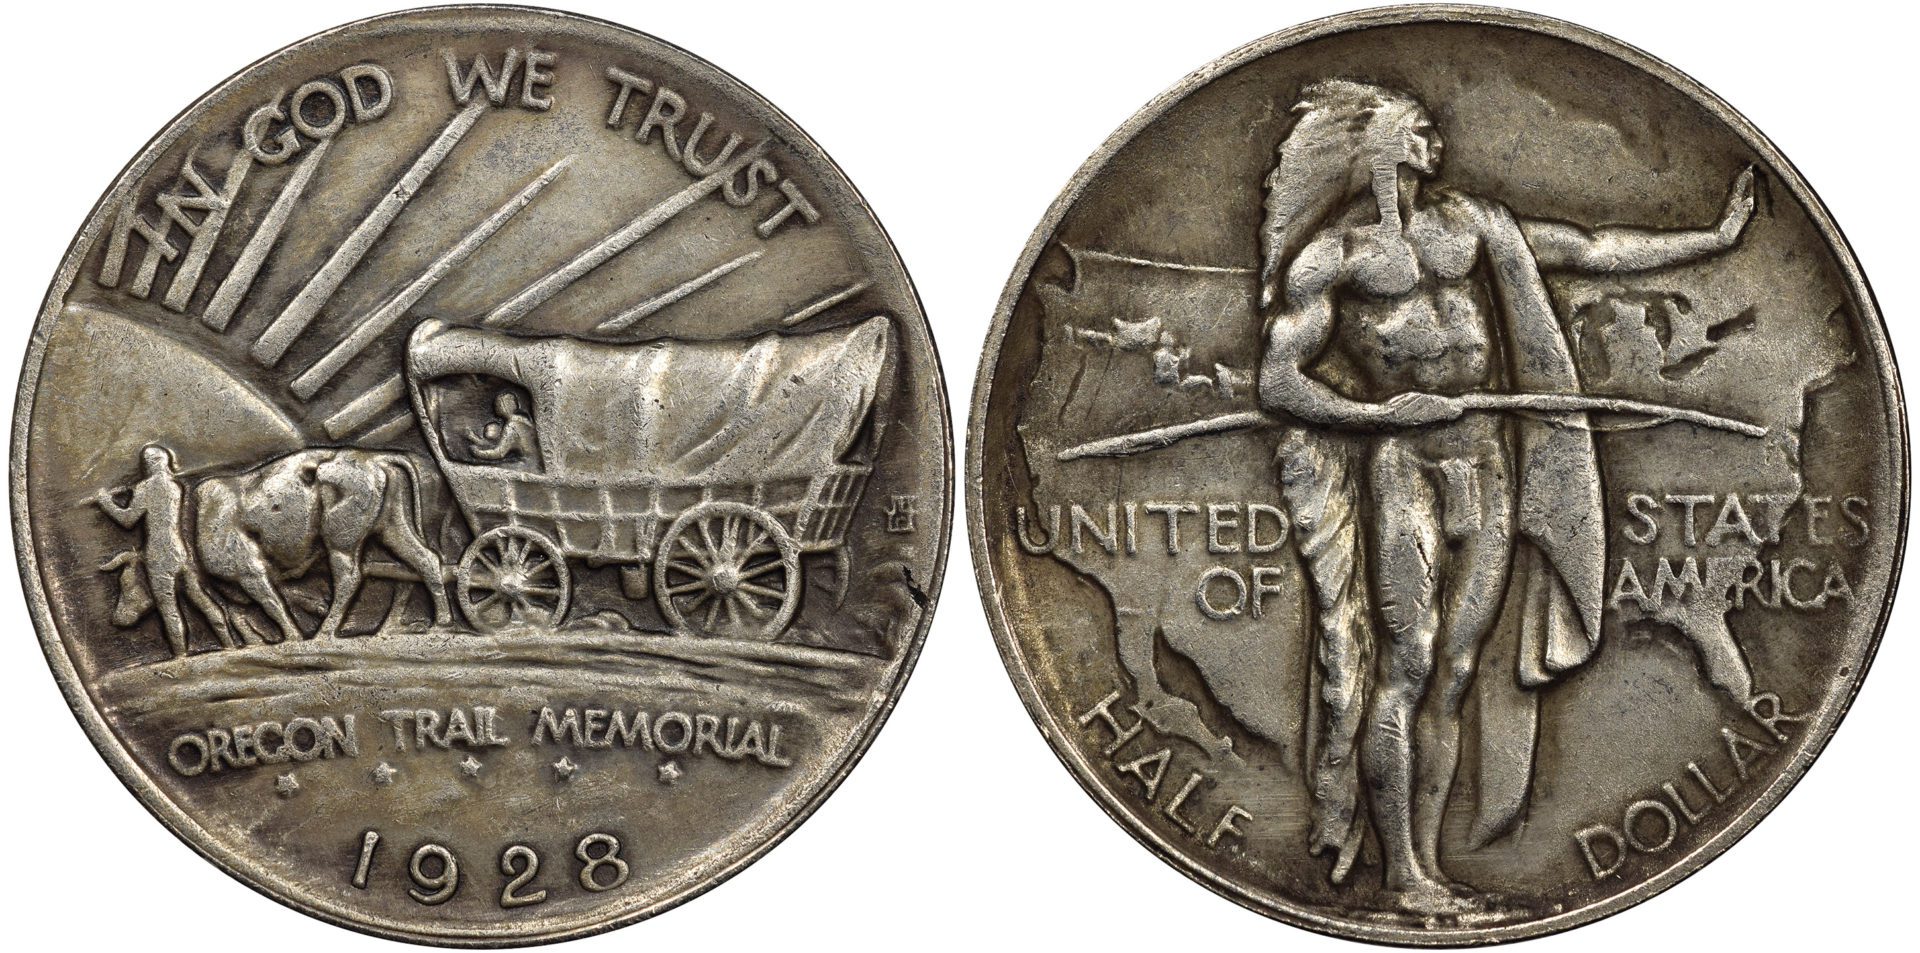 Counterfeit 1928 Oregon Trail Memorial half dollar